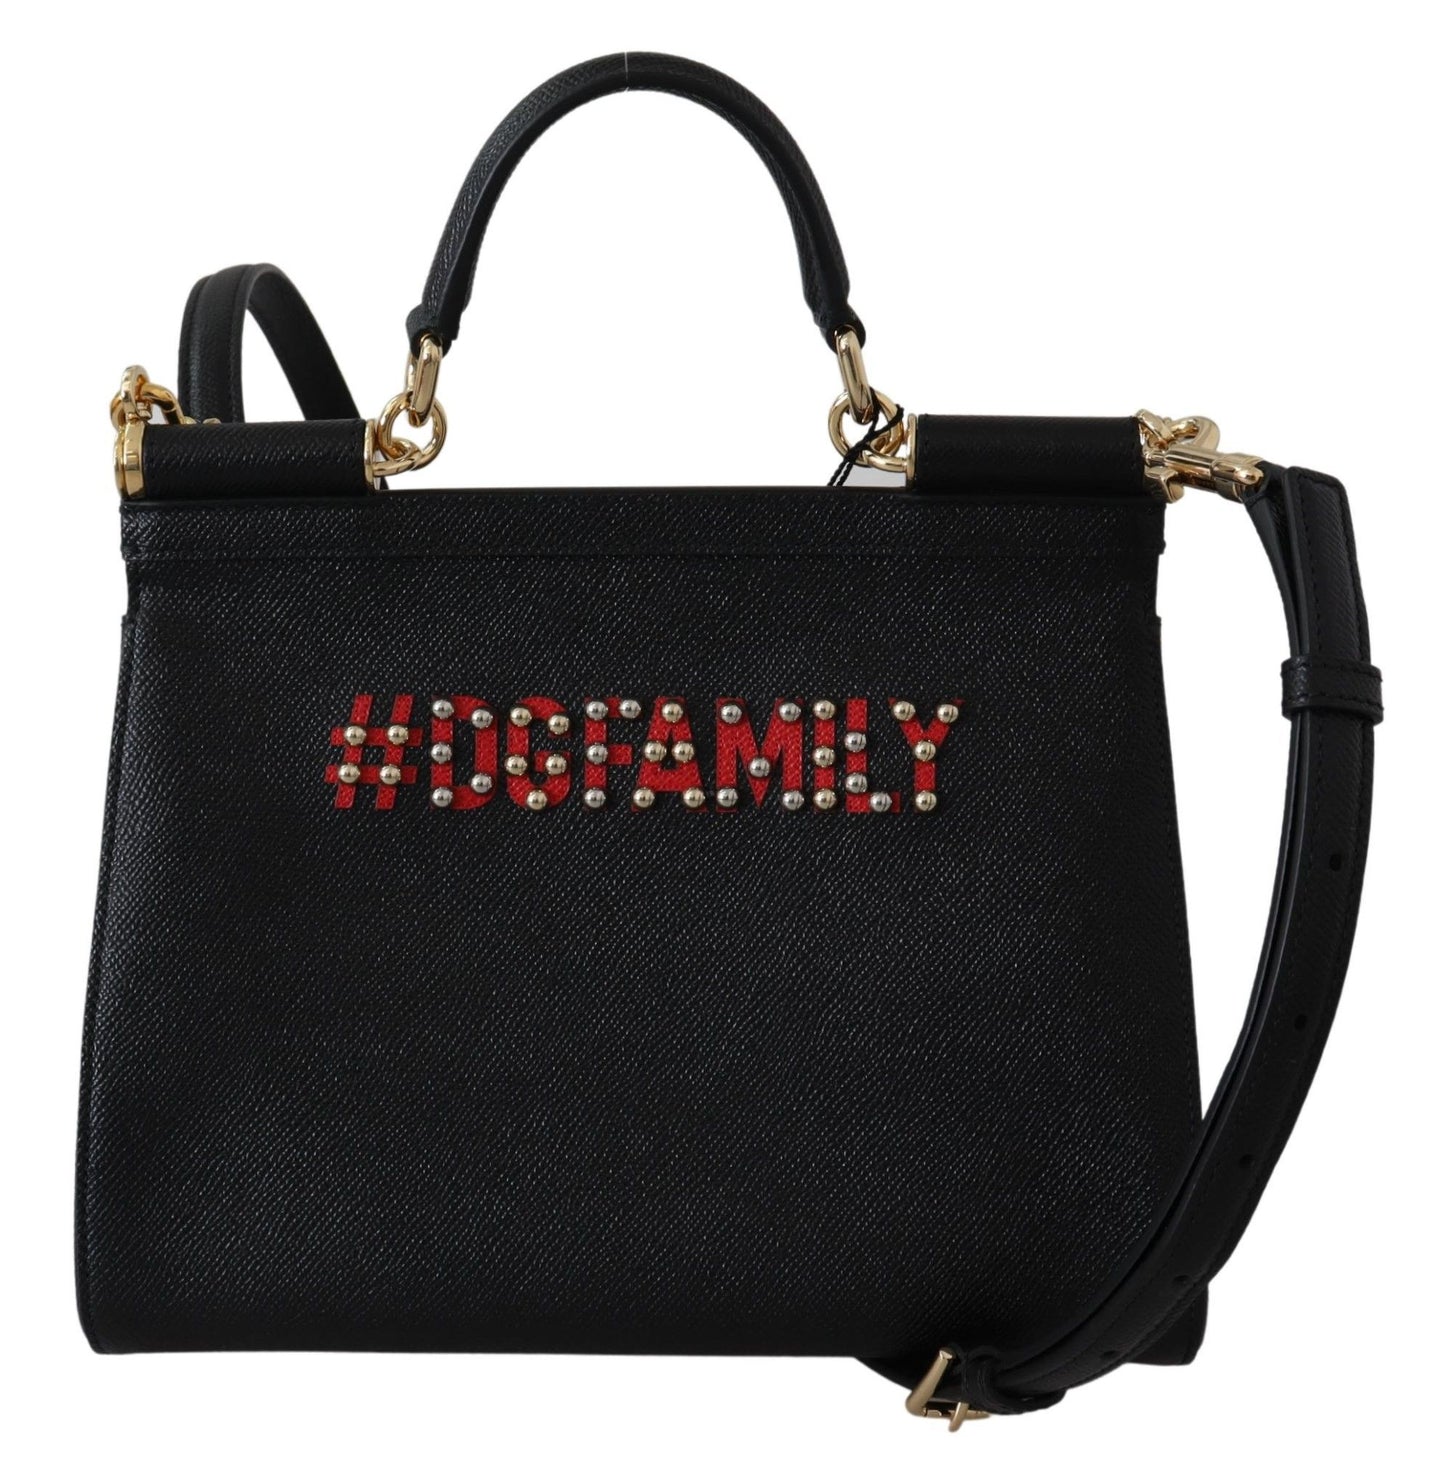 Black Leather #dgfamily Borse Satchel Handbag Purse SICILY Bag